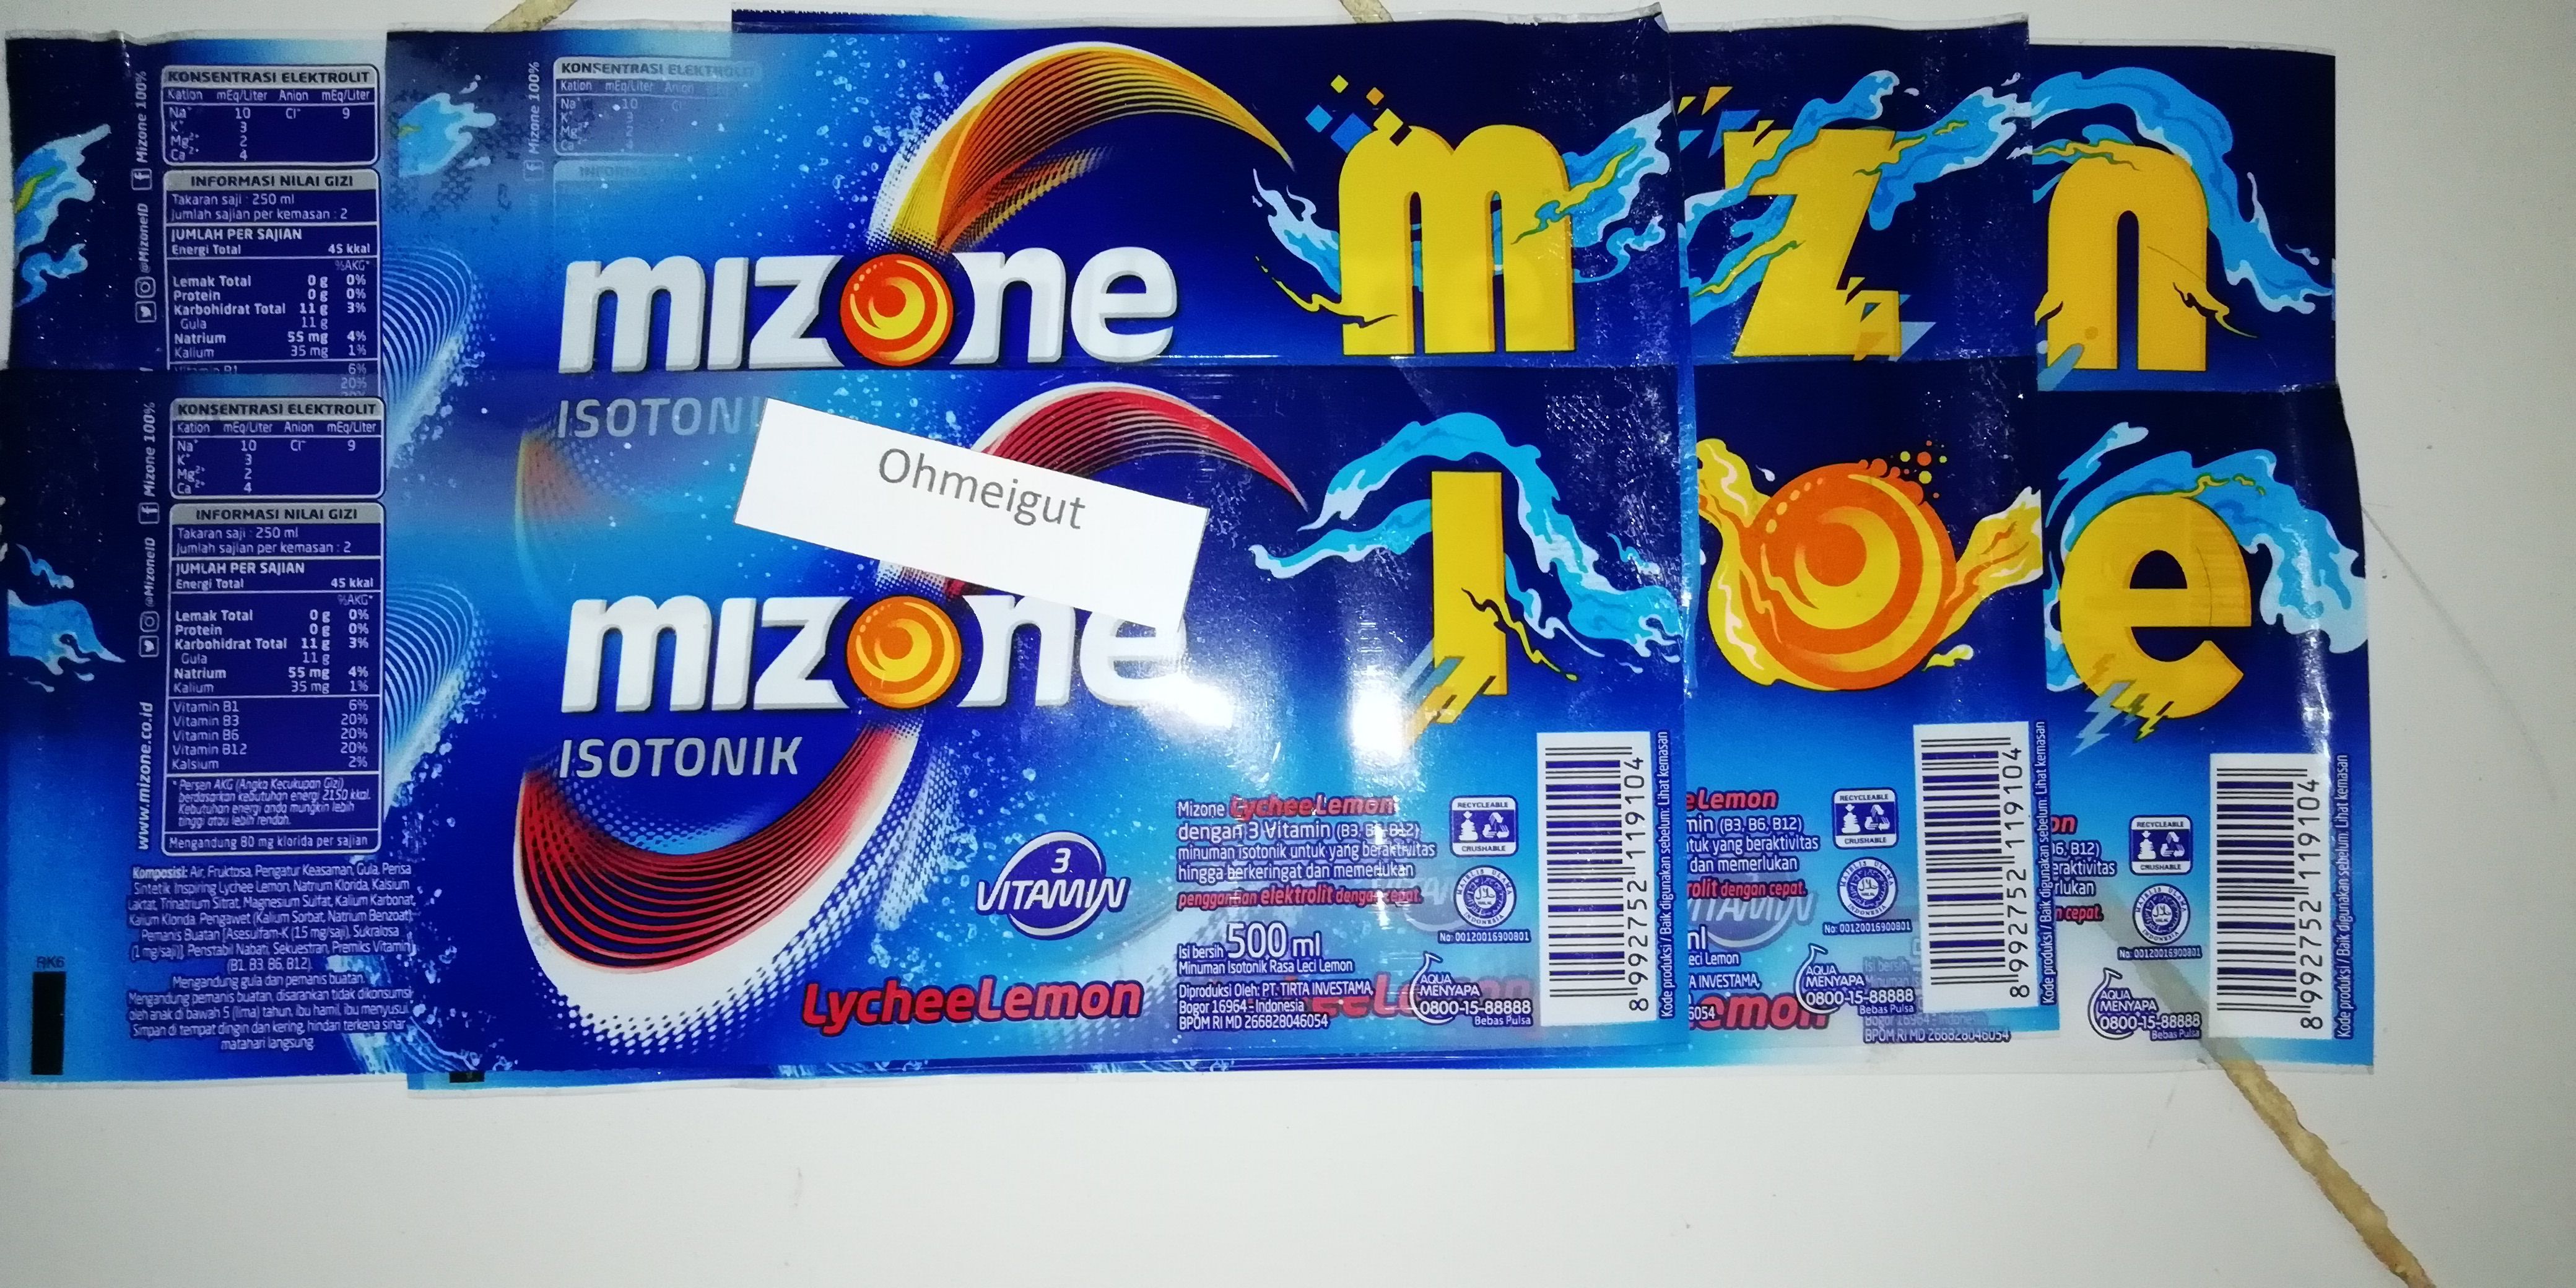 OMG! MIZONE IS GOOD #KASKUSxMizone